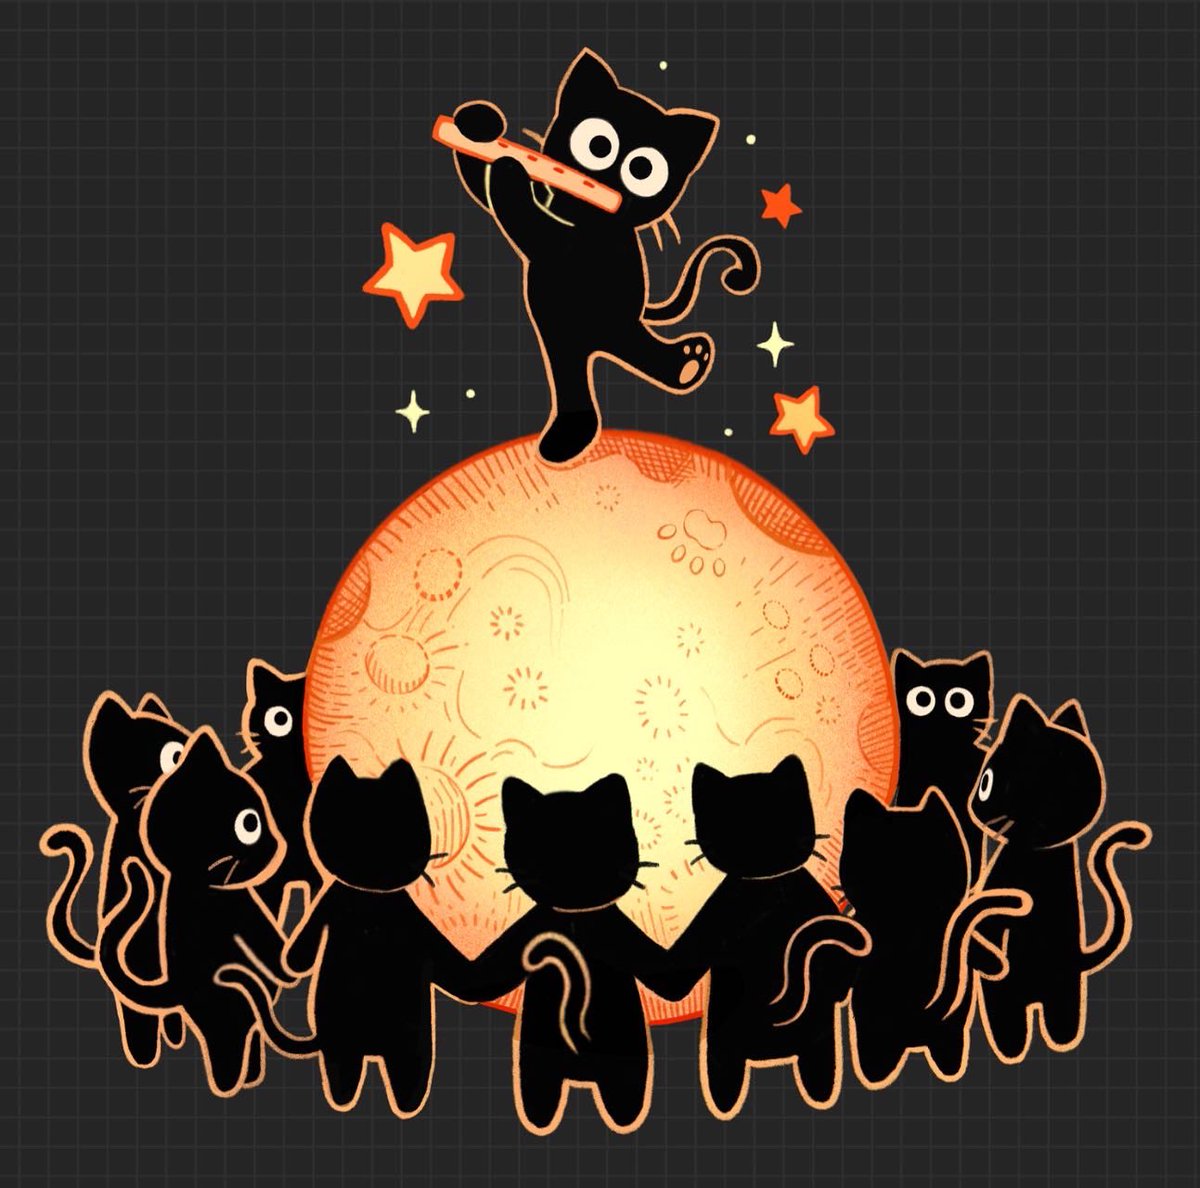 cat no humans animal focus star (symbol) black cat grey background moon  illustration images